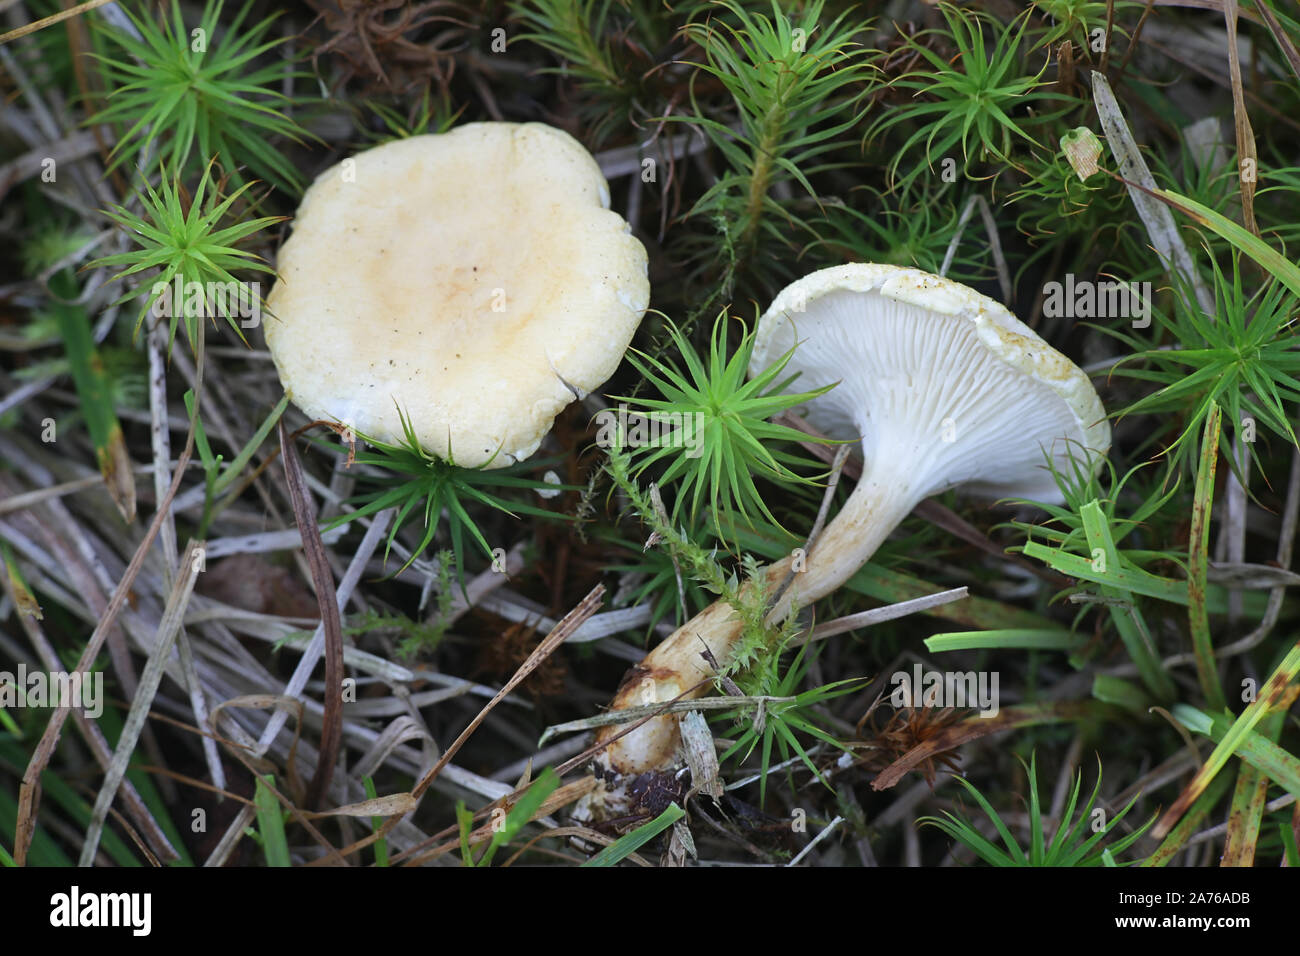 Hygrophoropsis pallida (H. aurantiaca var. pallida), known as False Chanterelle, wild mushroom from Finland Stock Photo